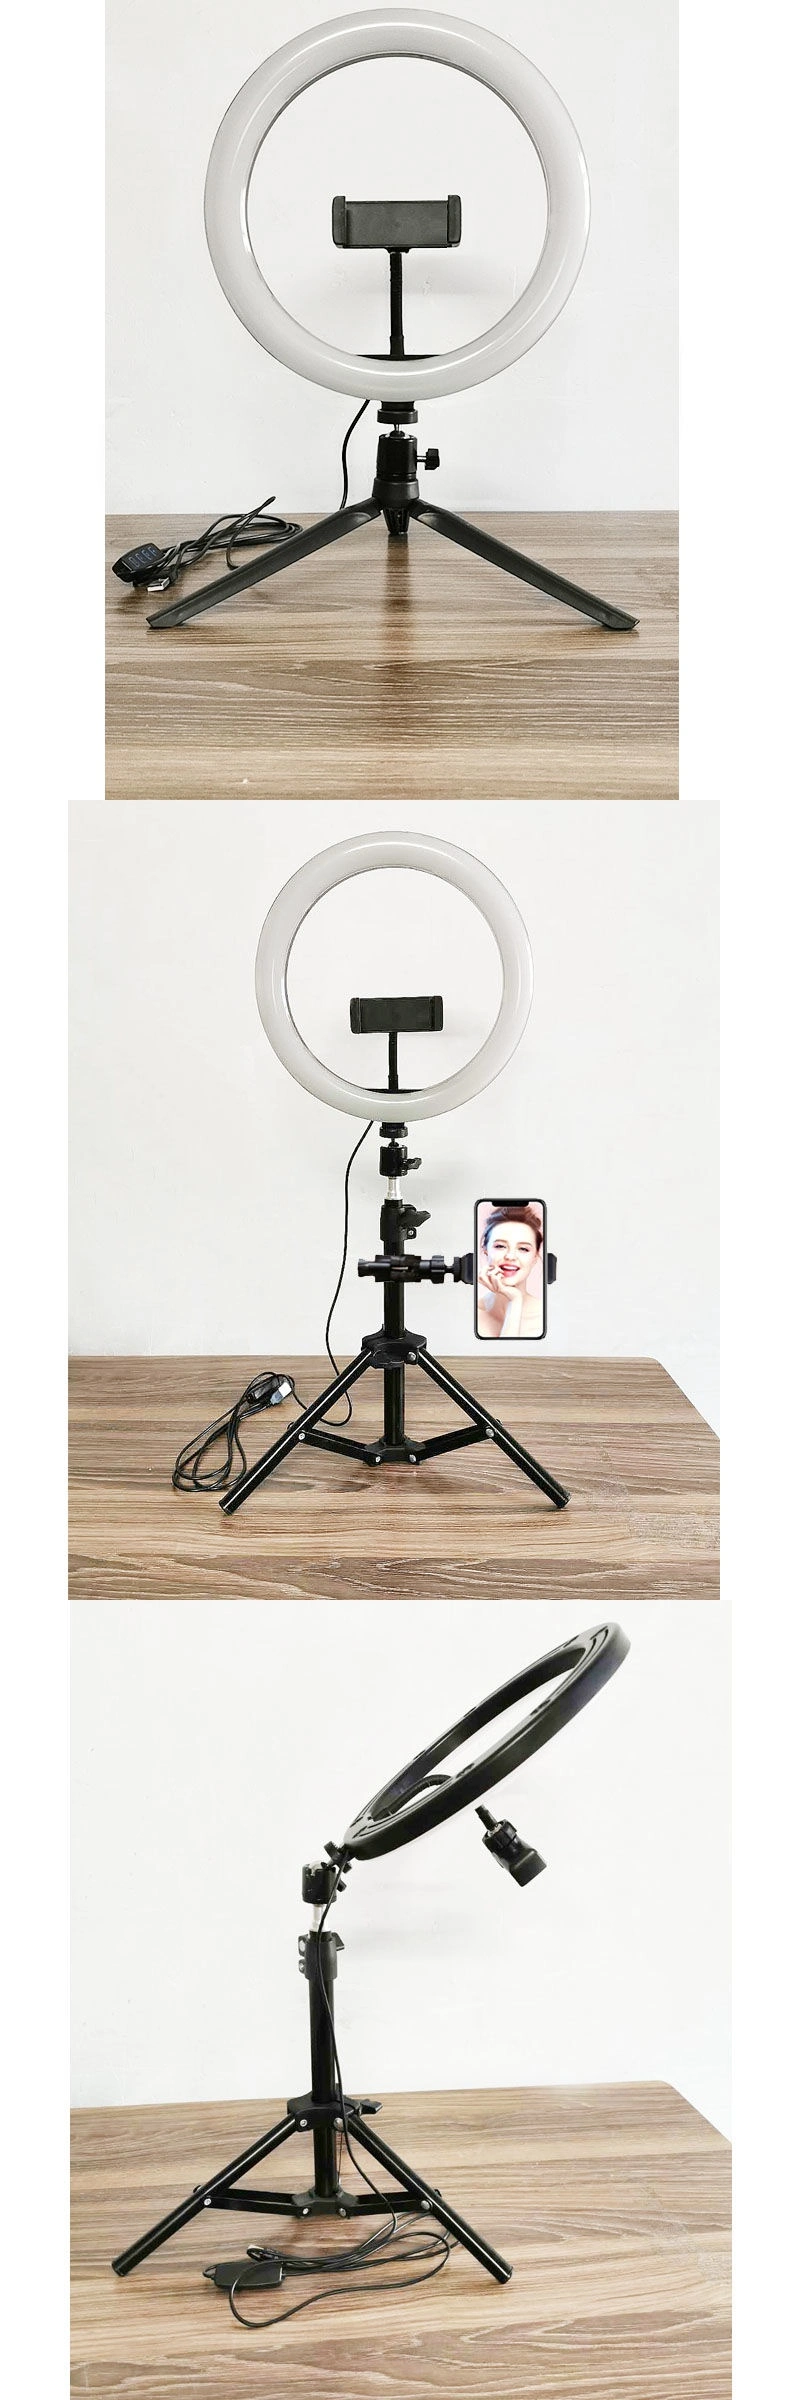 Douying Anchor Live Desktop Mini Tripod Shoot Tripod Selfie Stick Handle Small Mobile Phone Stand